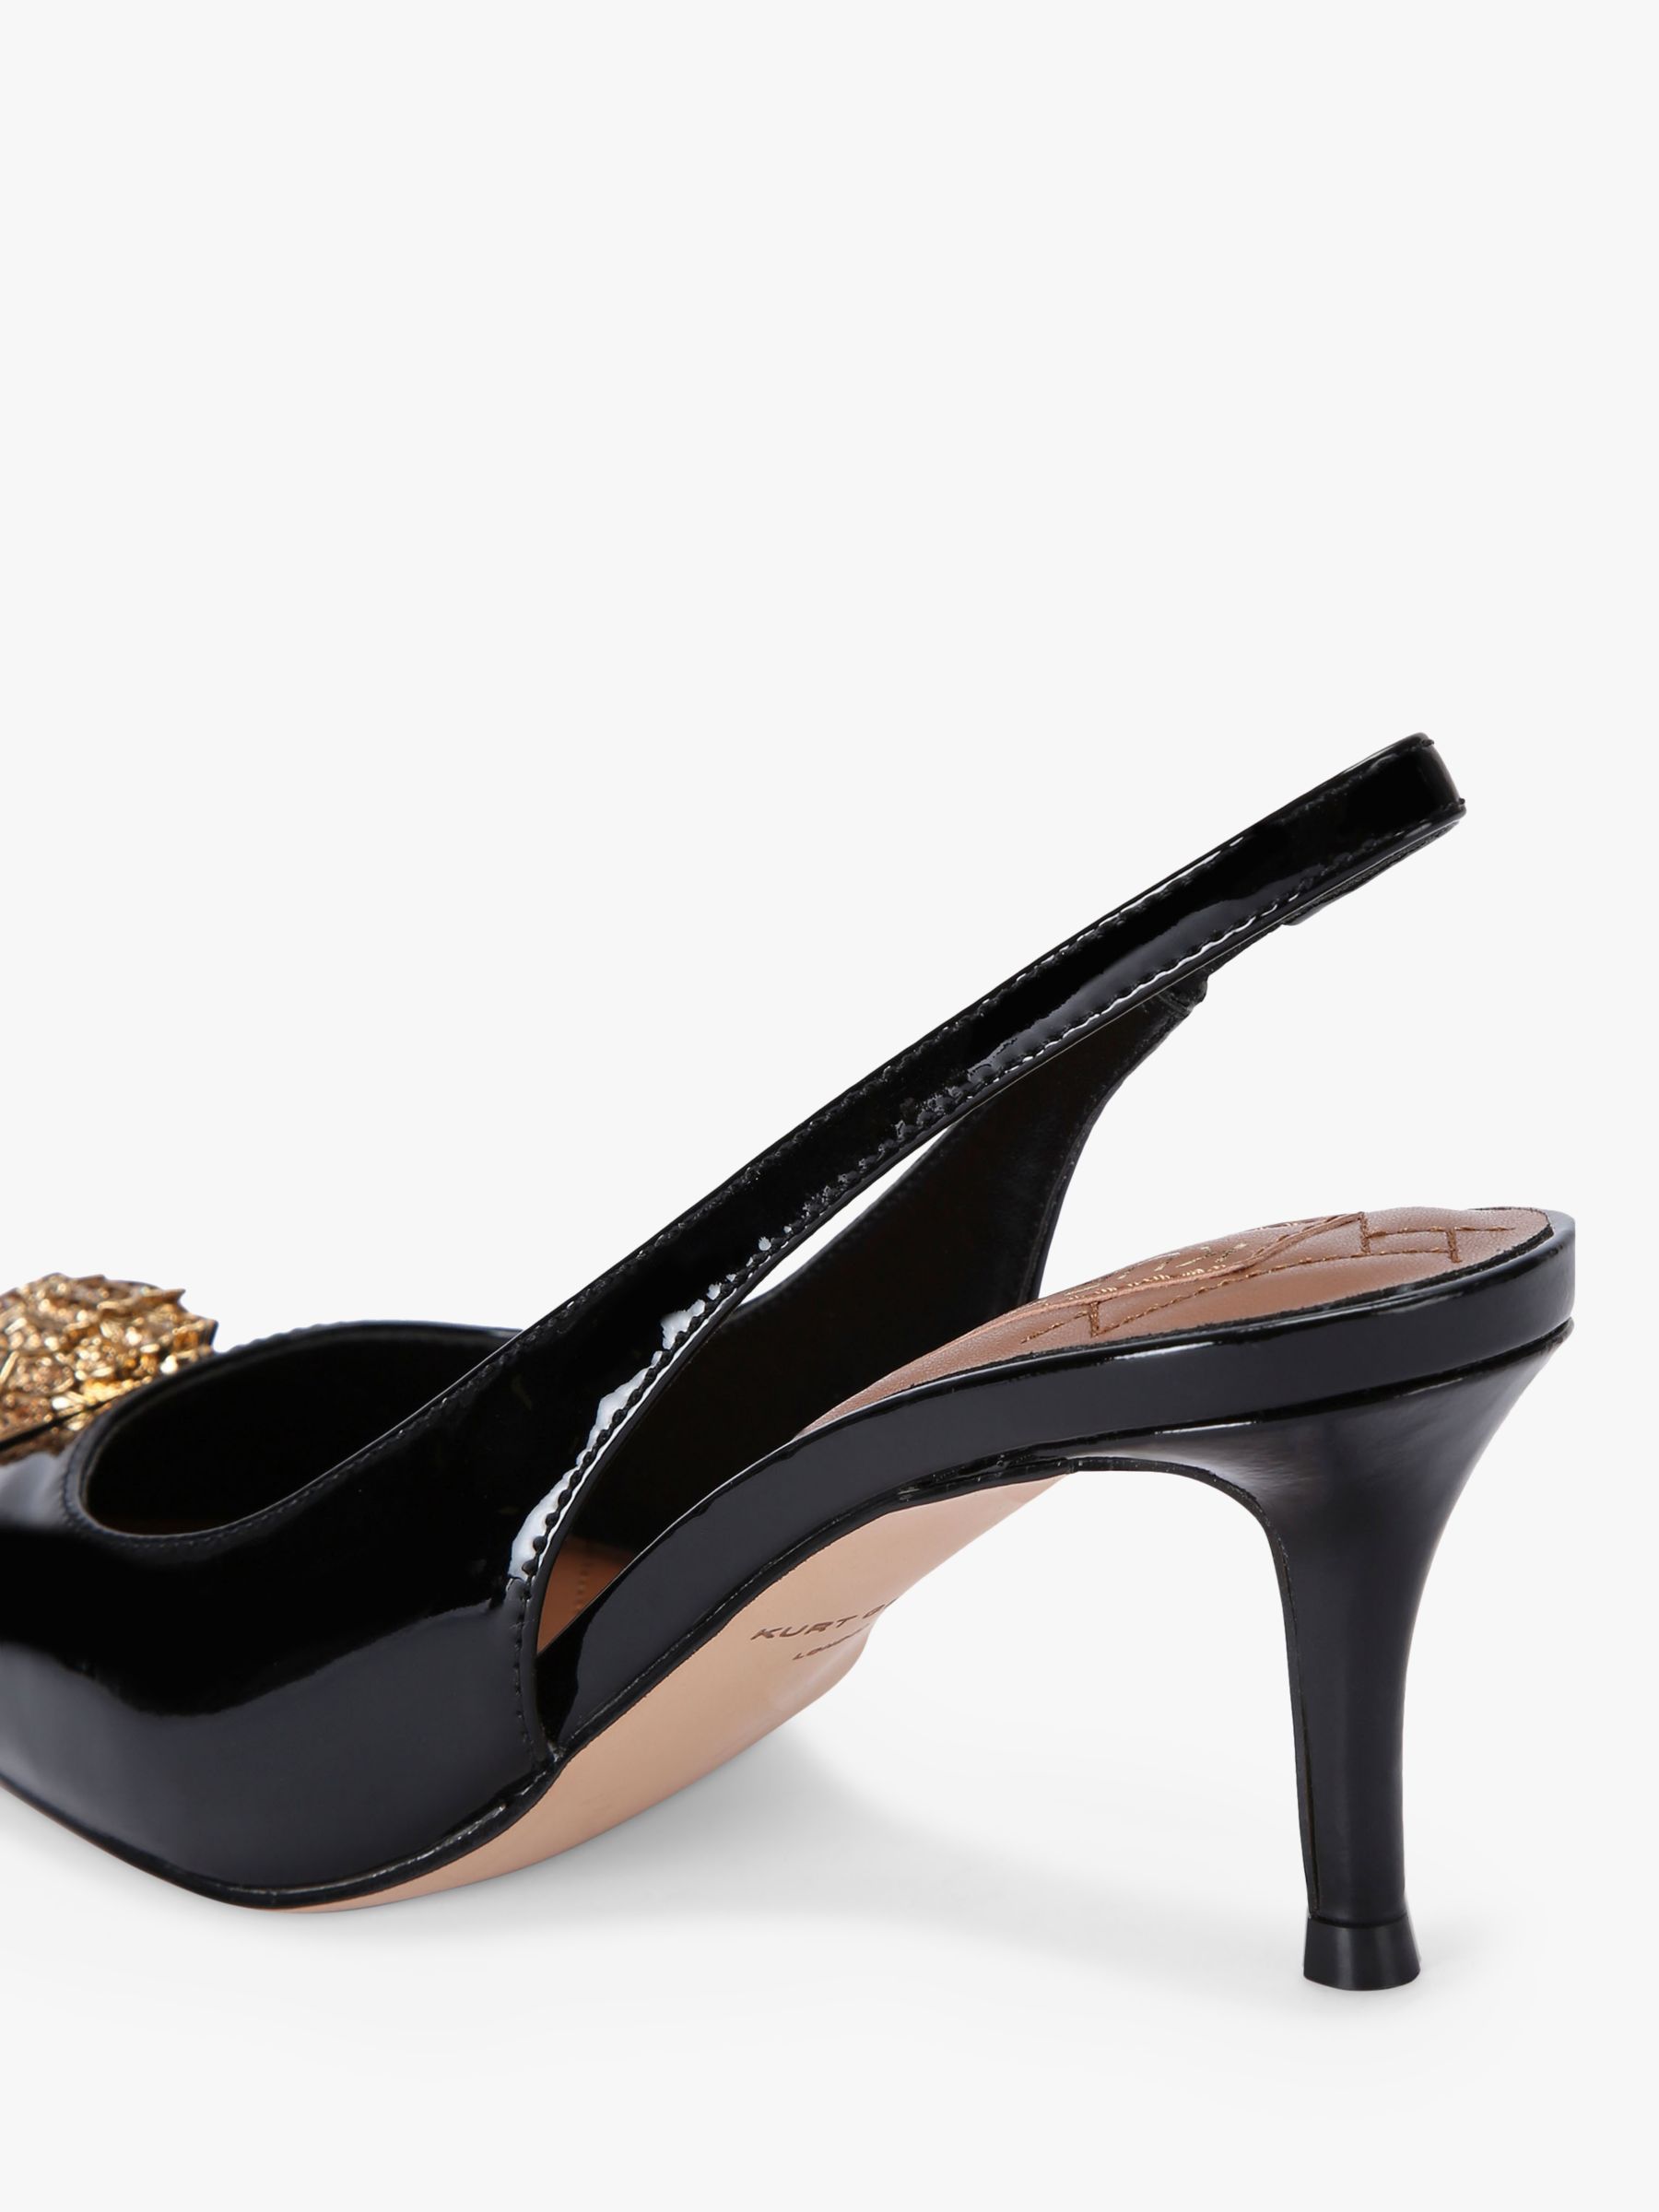 Kurt Geiger London Belgravia Patent Slingback Court Shoes, Black, 7